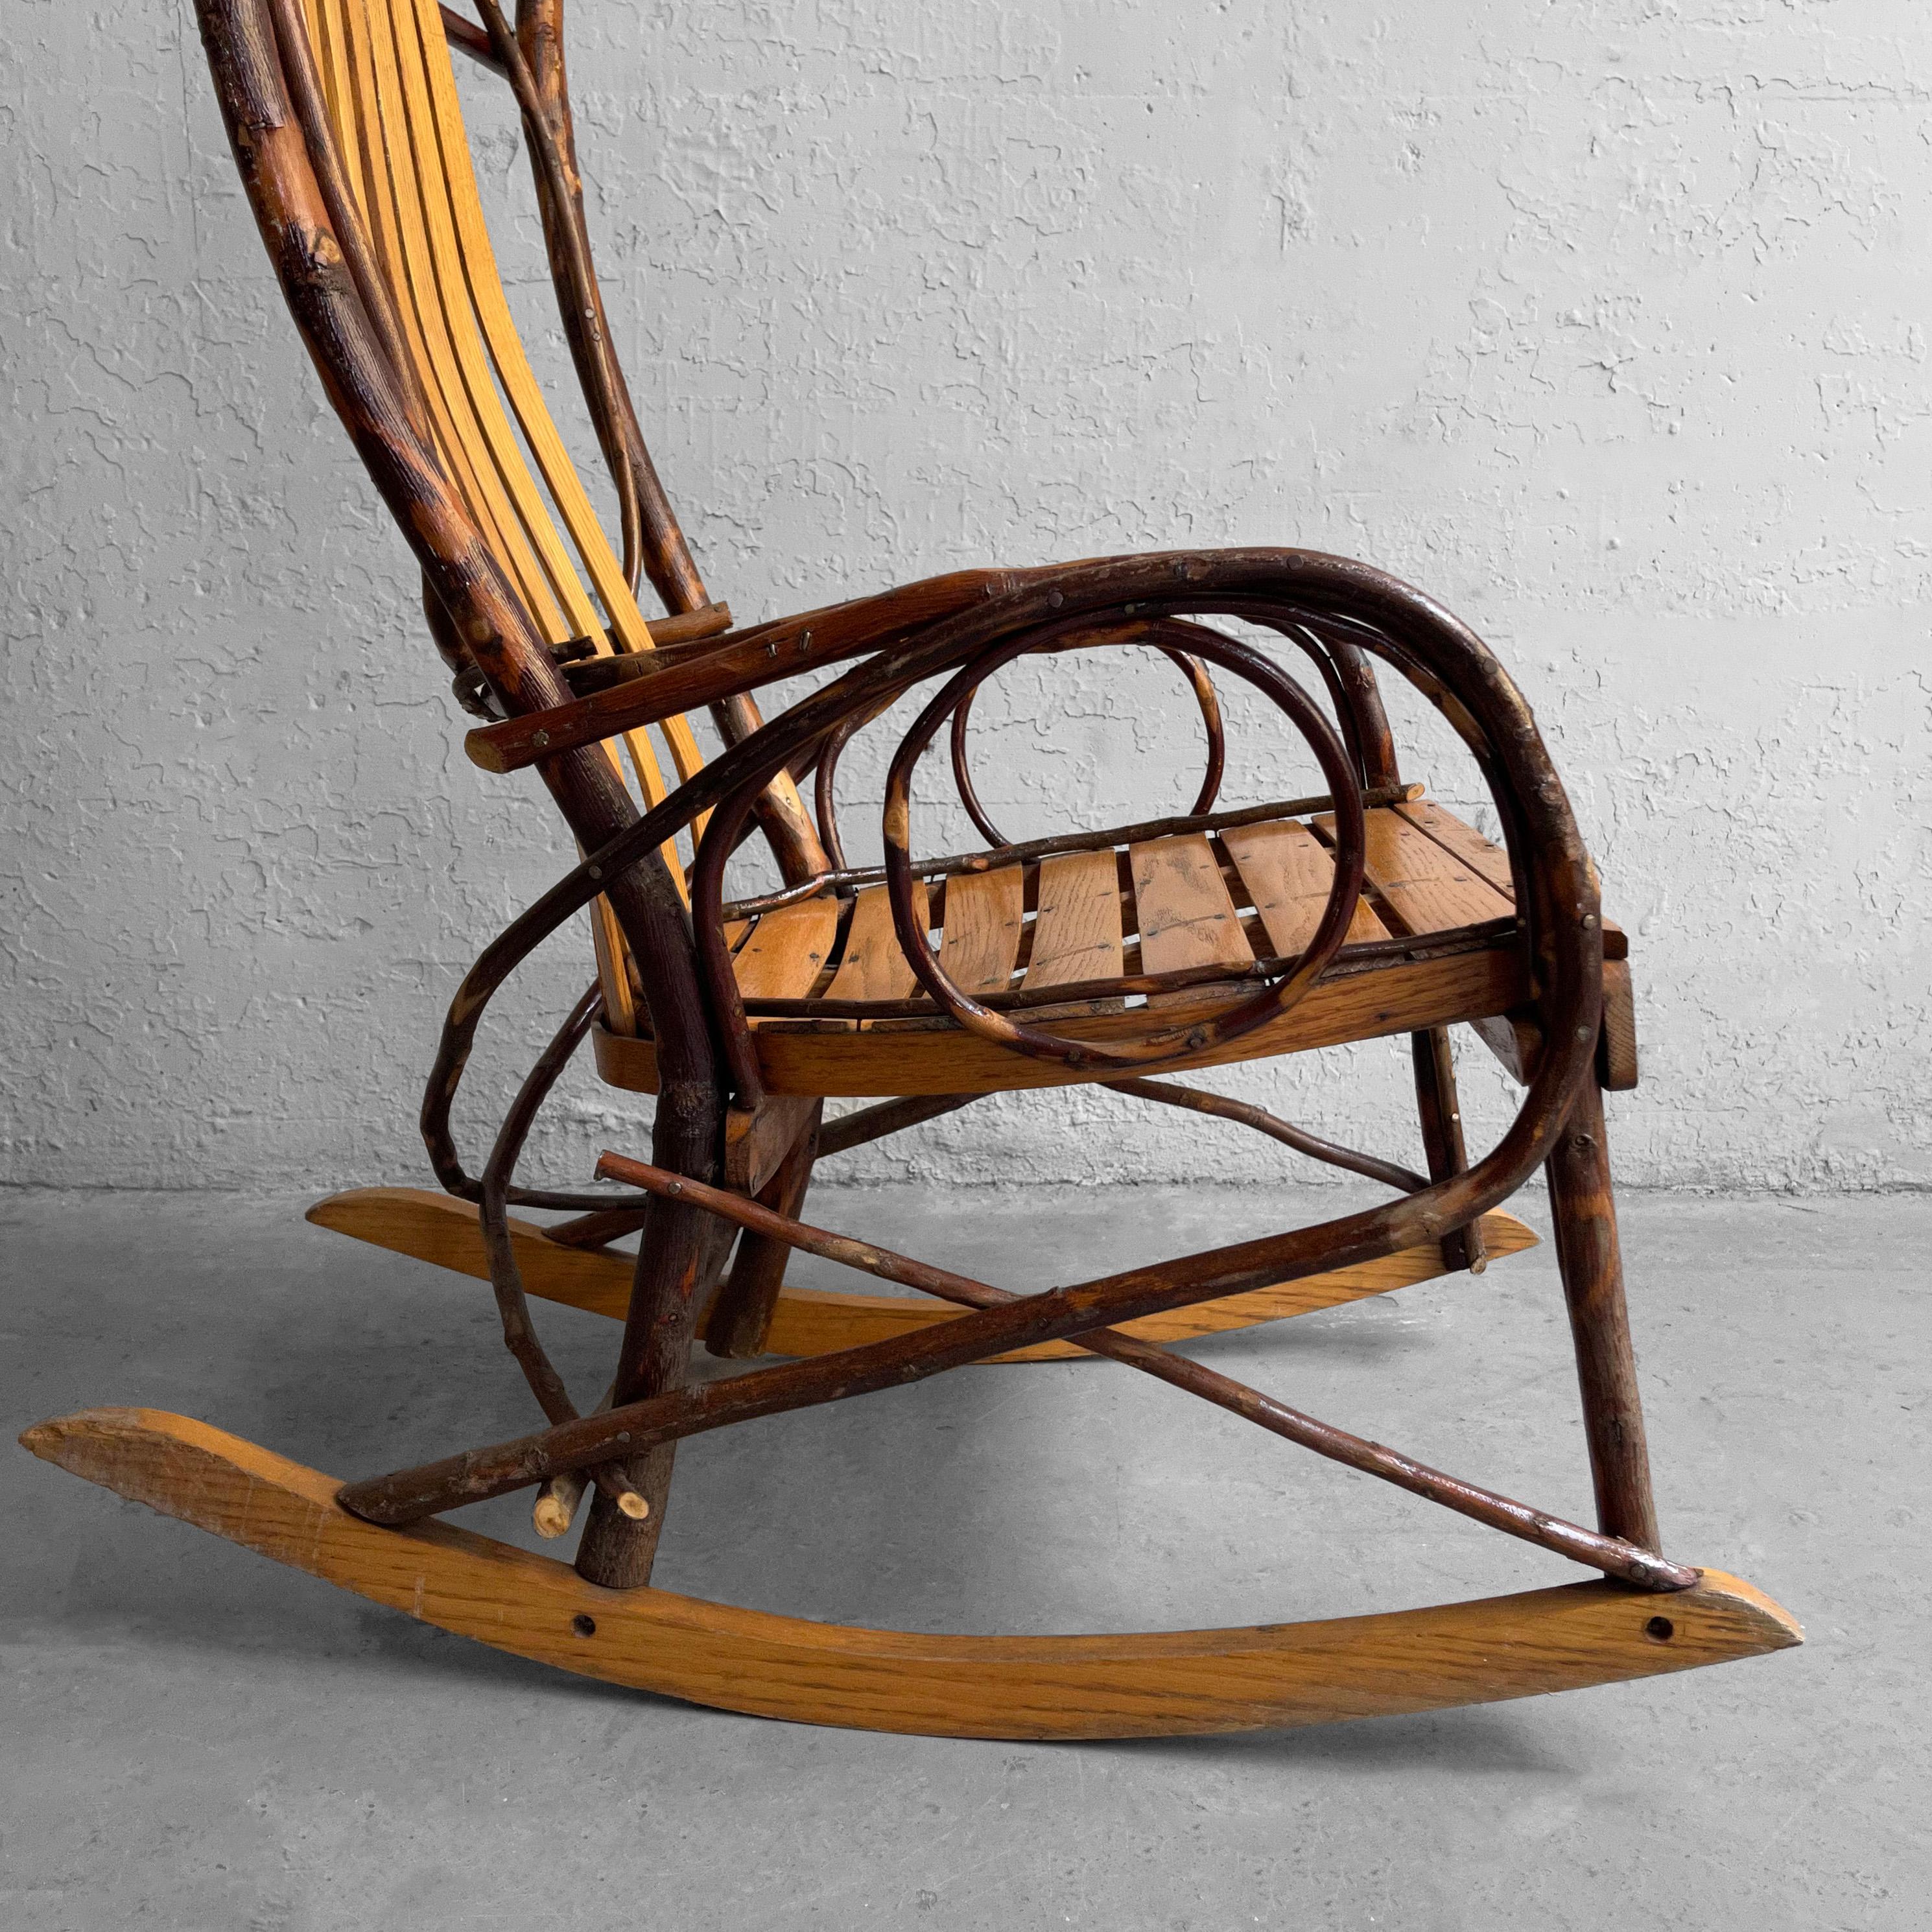 American Rustic Primitive Adirondack Twig Rocking Chair For Sale